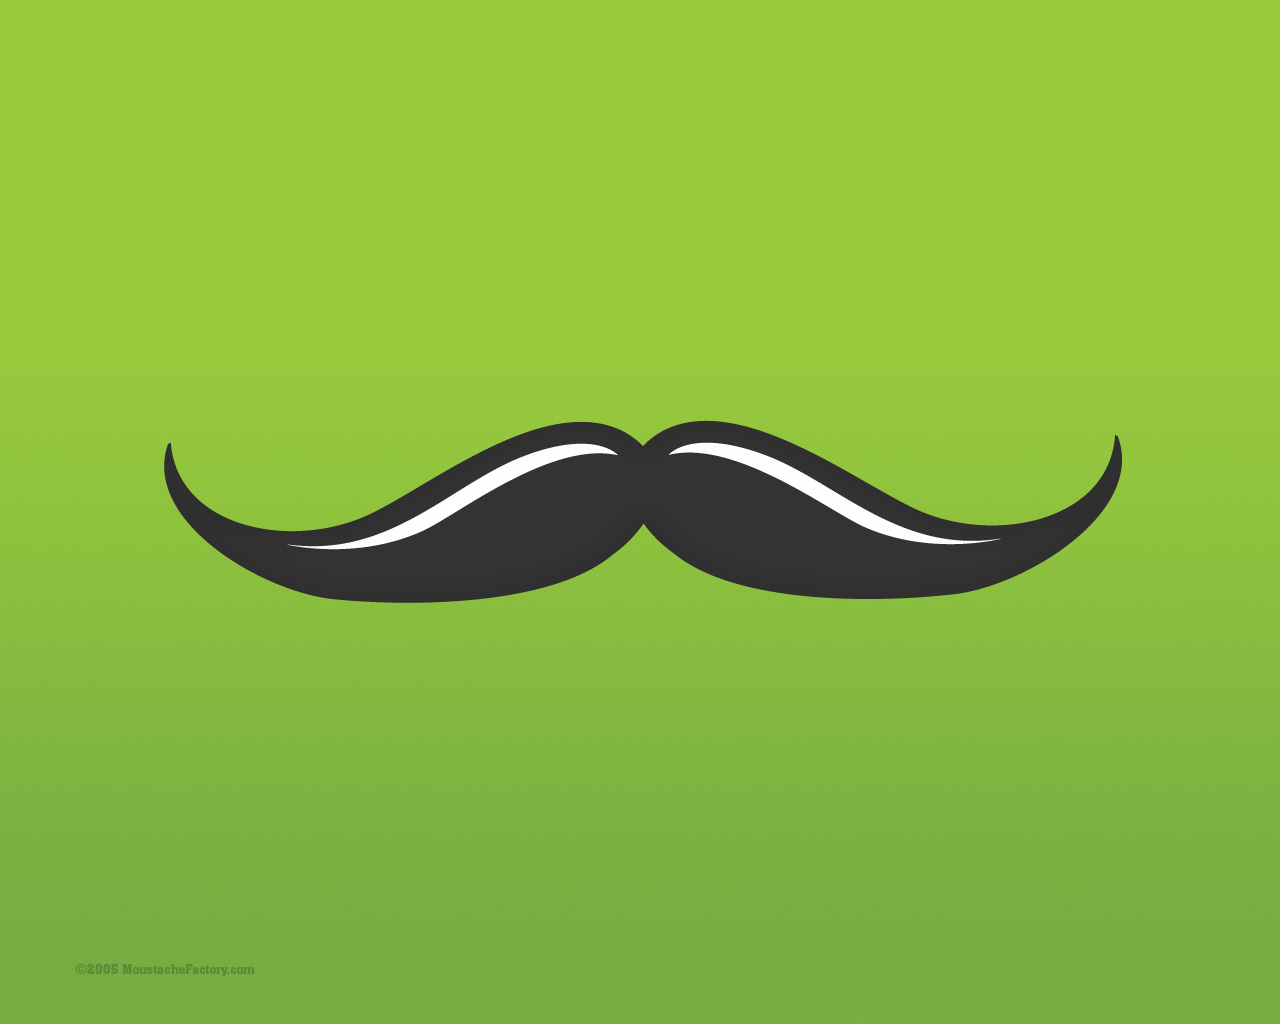 wallpaper kumis,hair,green,moustache,hairstyle,illustration